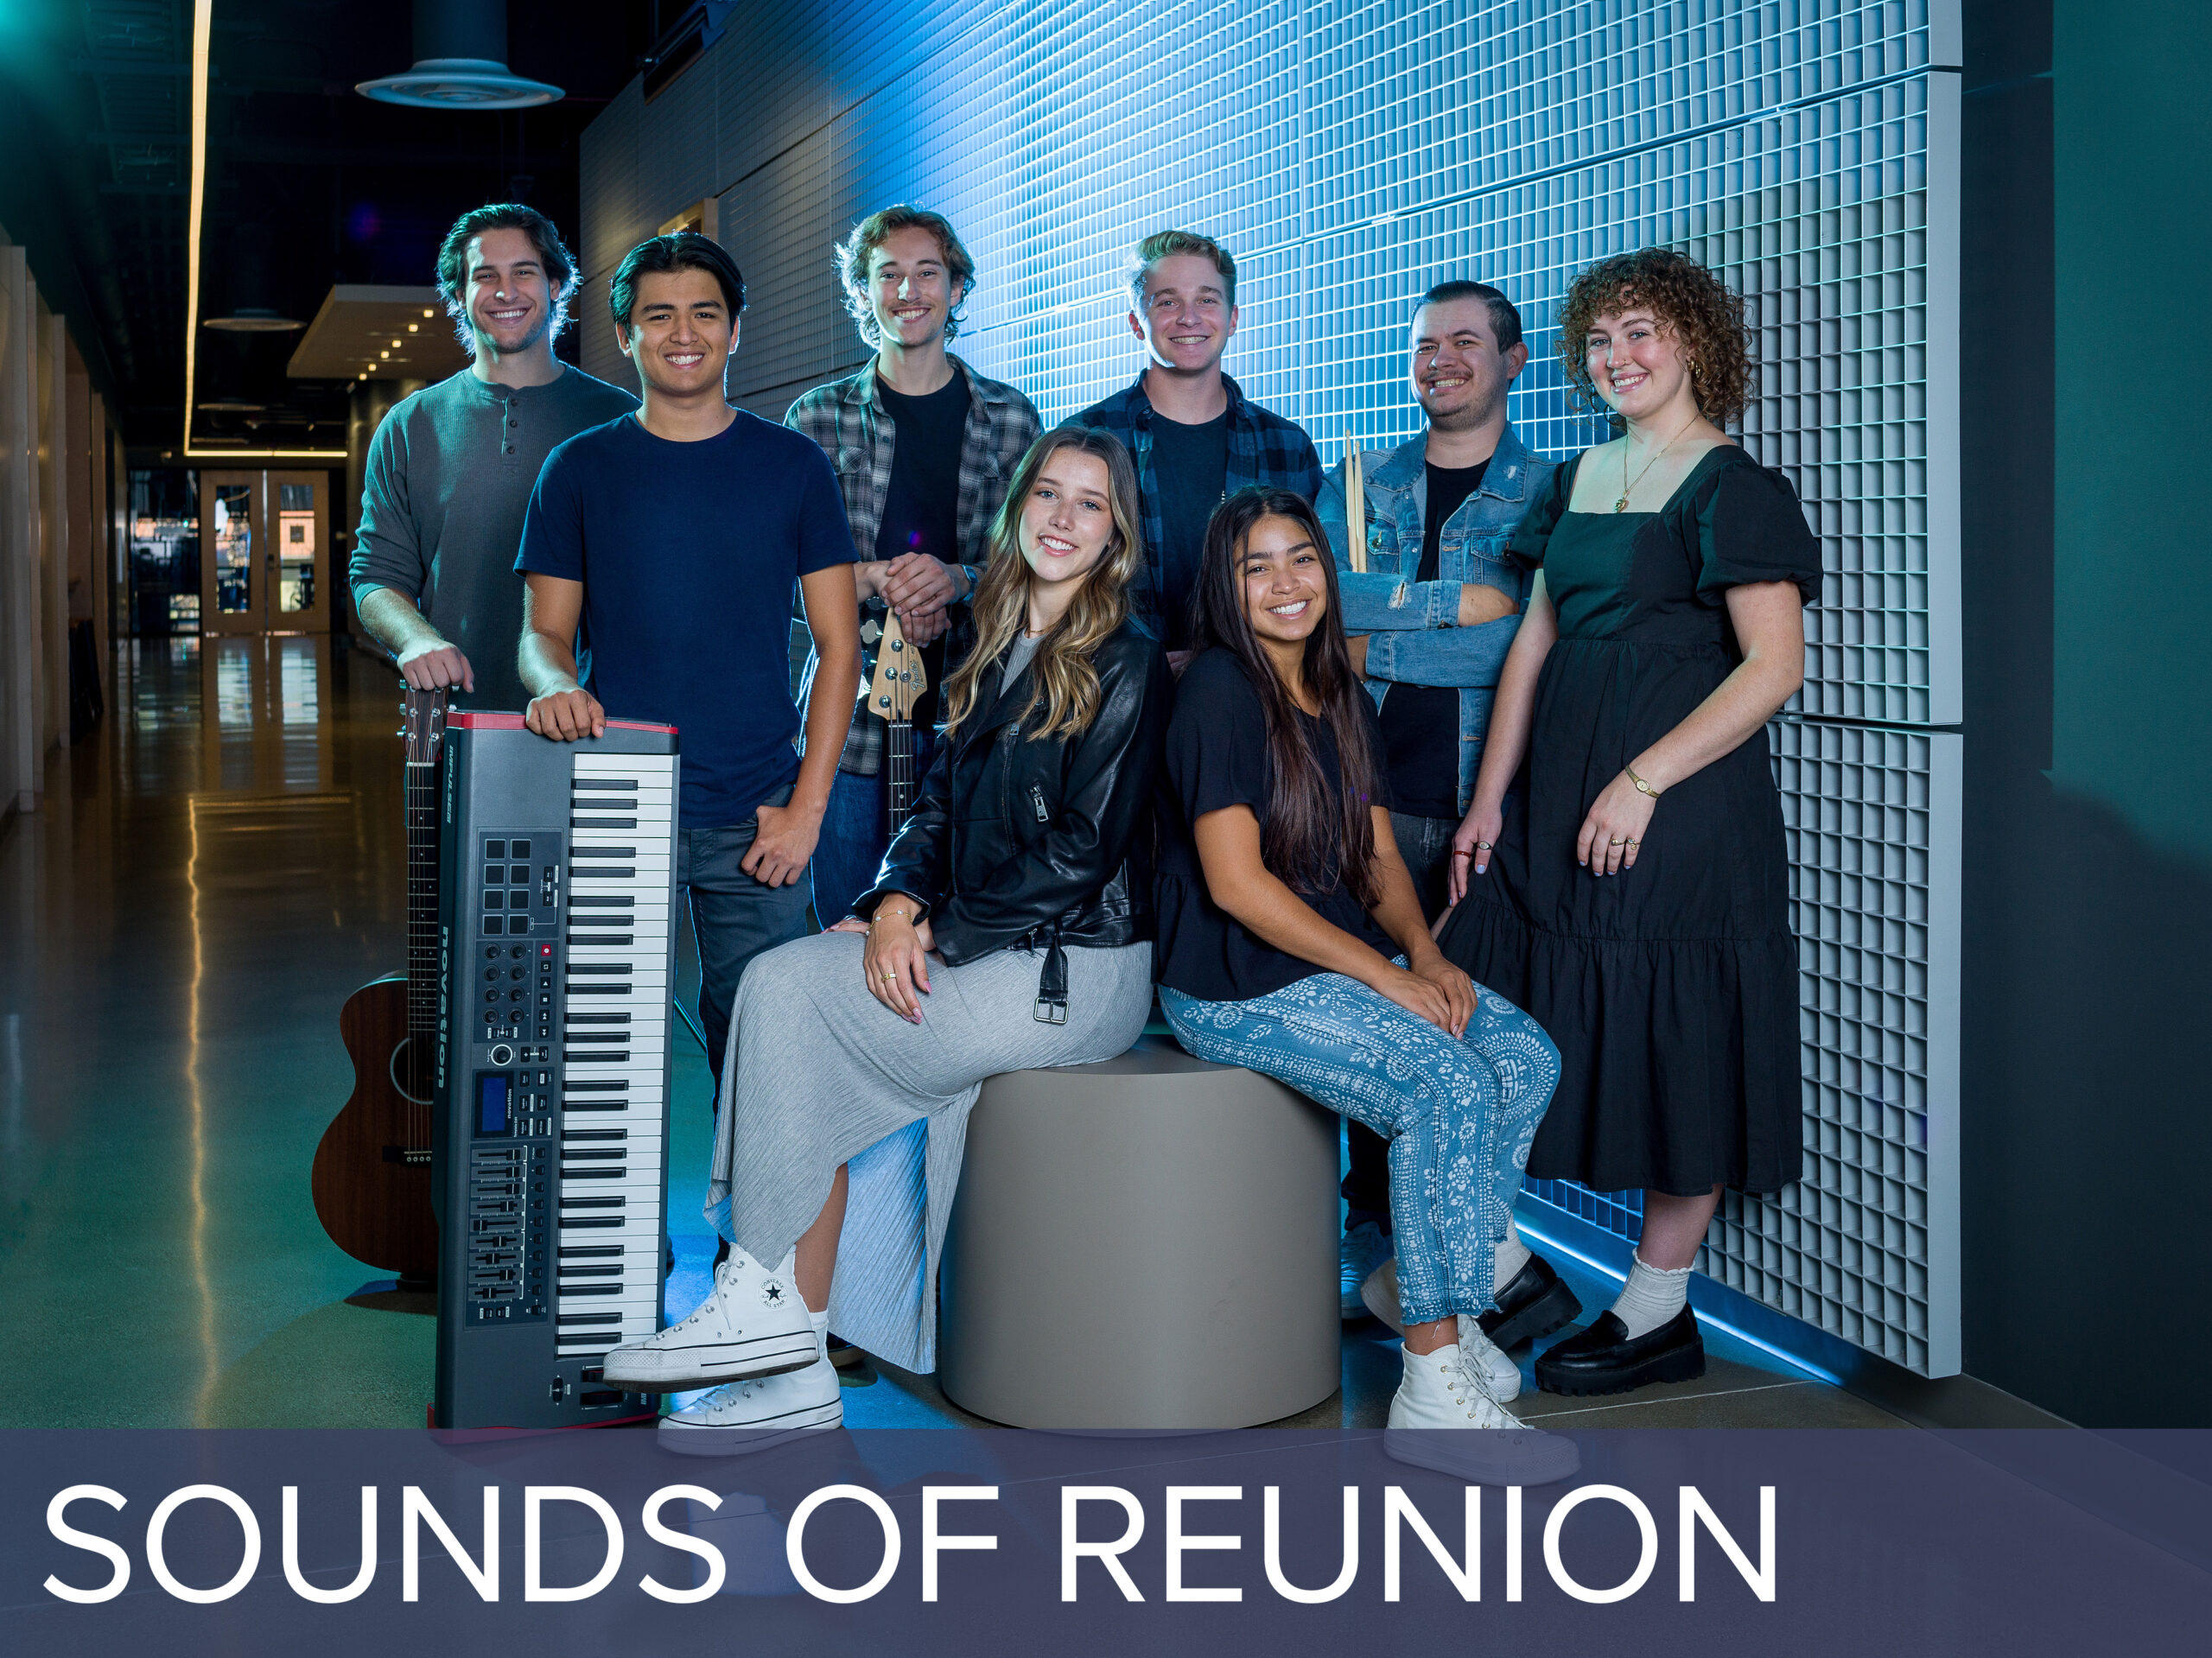 Sounds of Reunion